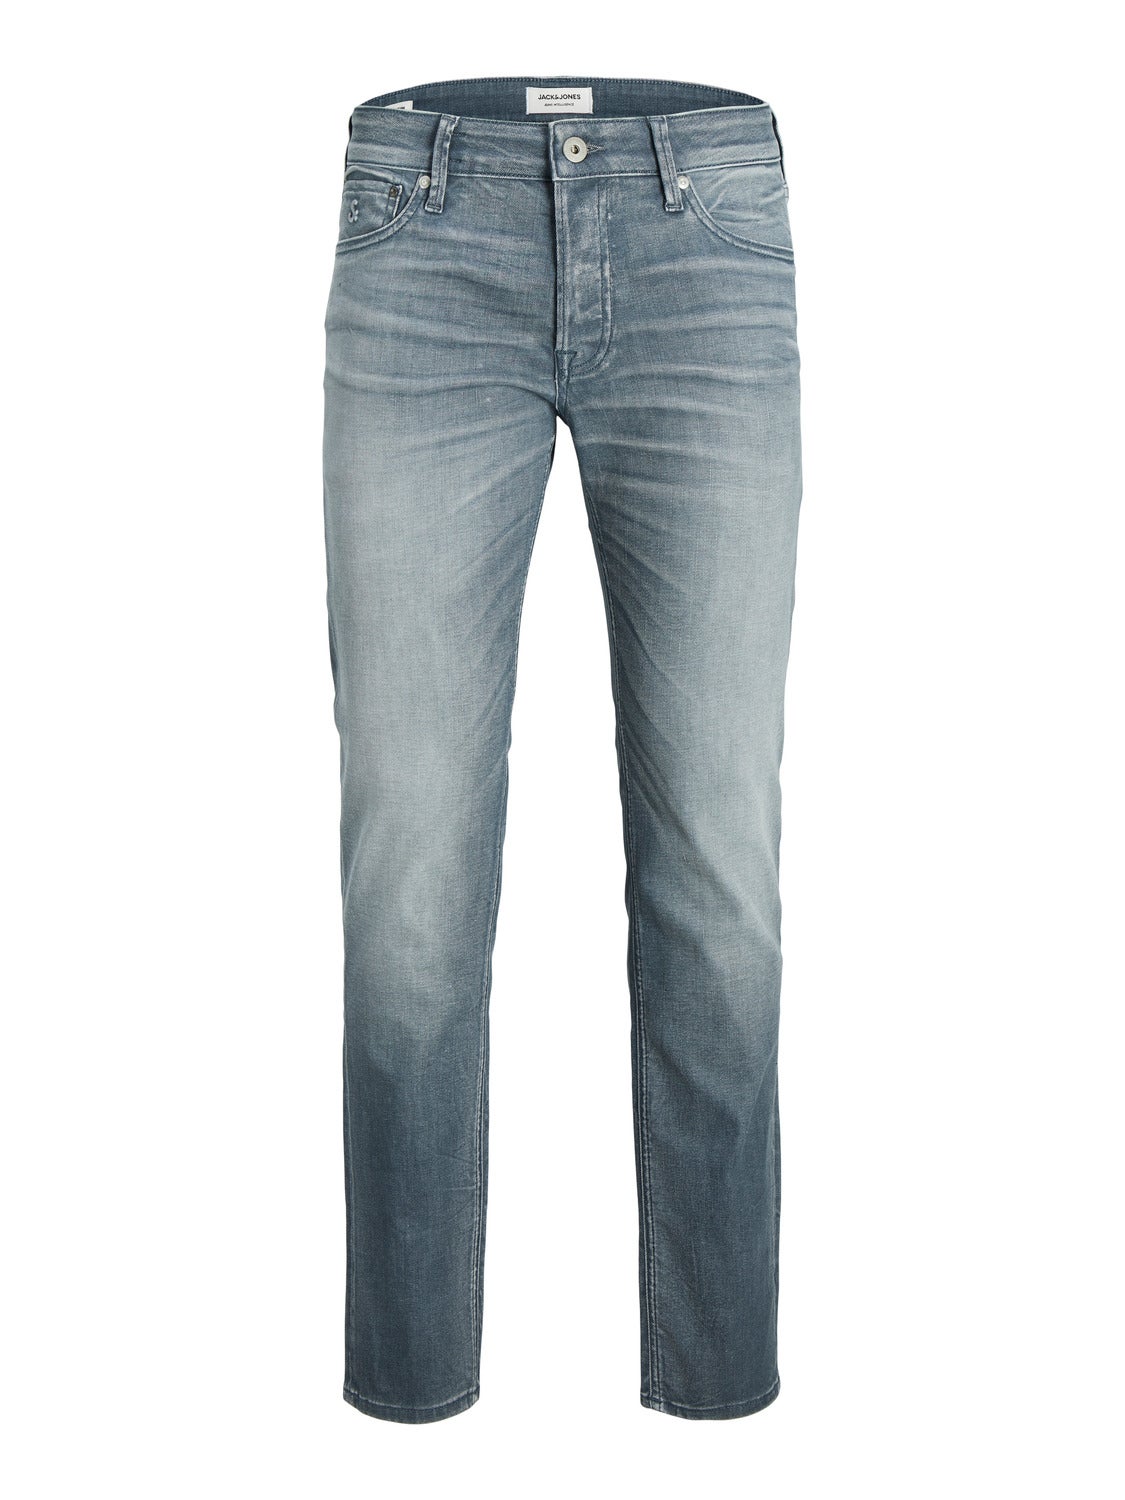 Buy Jack & Jones Medium Blue Slim Fit Jeans for Mens Online @ Tata CLiQ